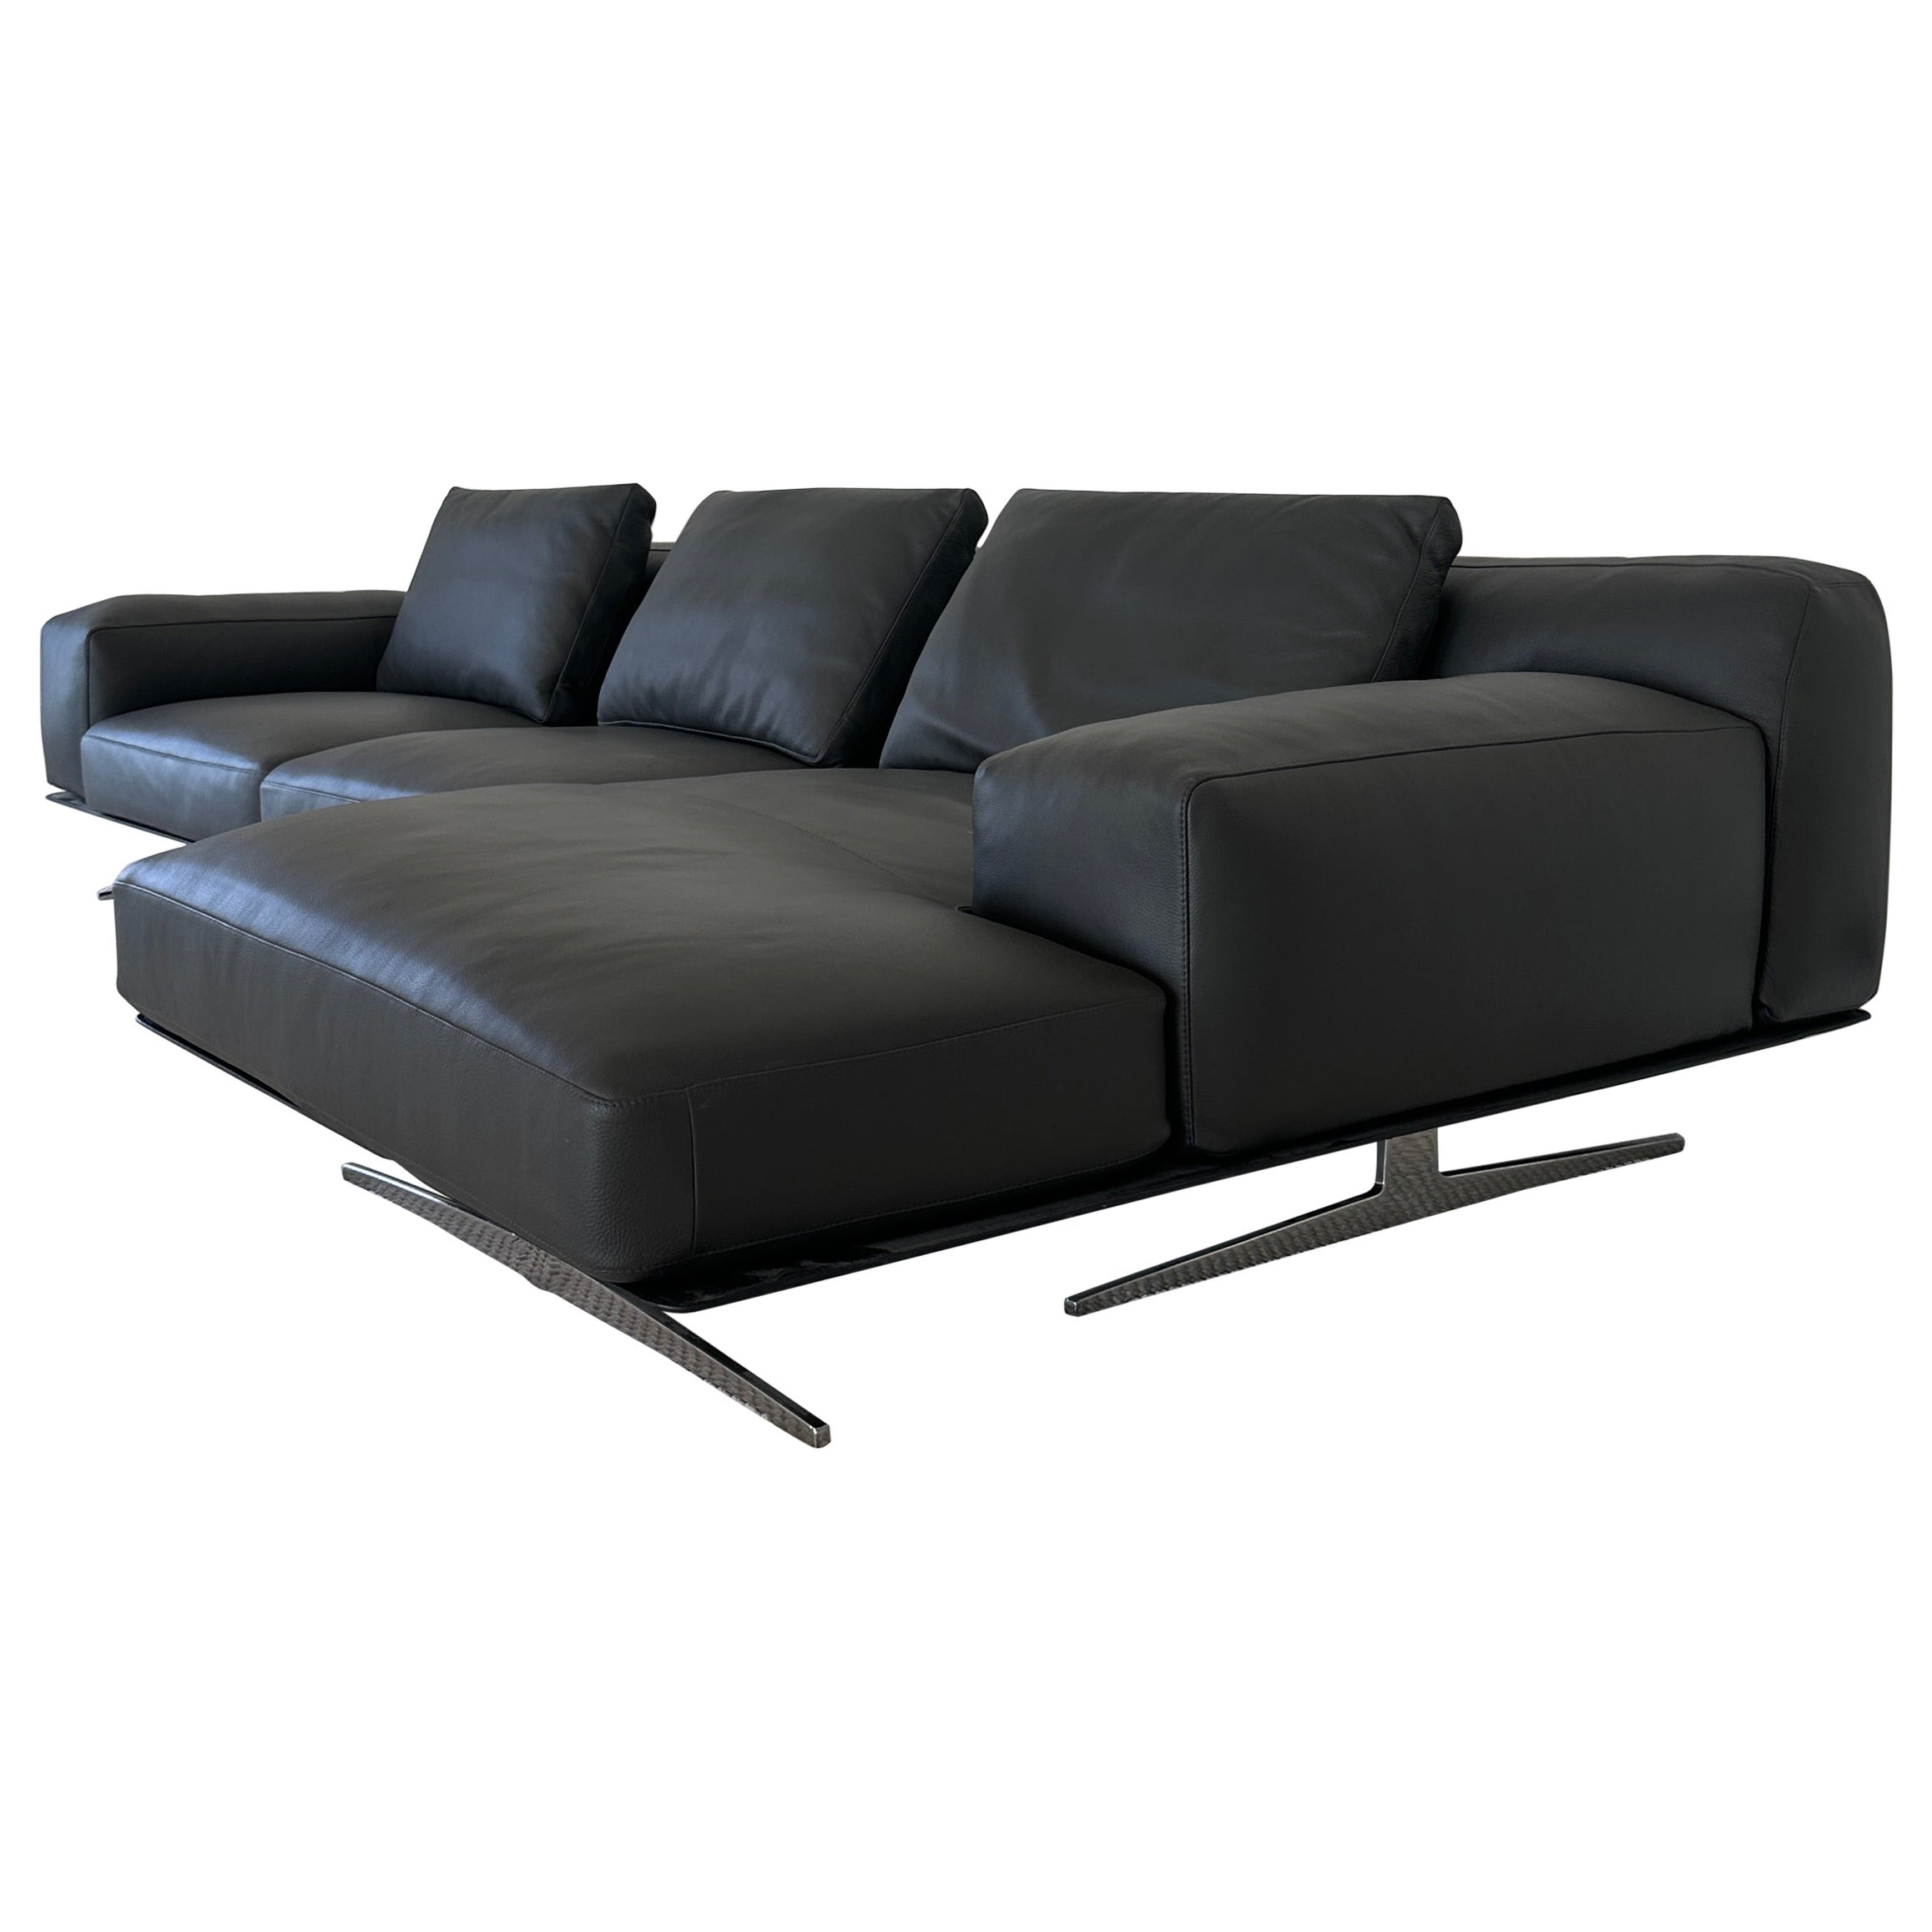 Dark grey Italian leather sectional sofa For Sale